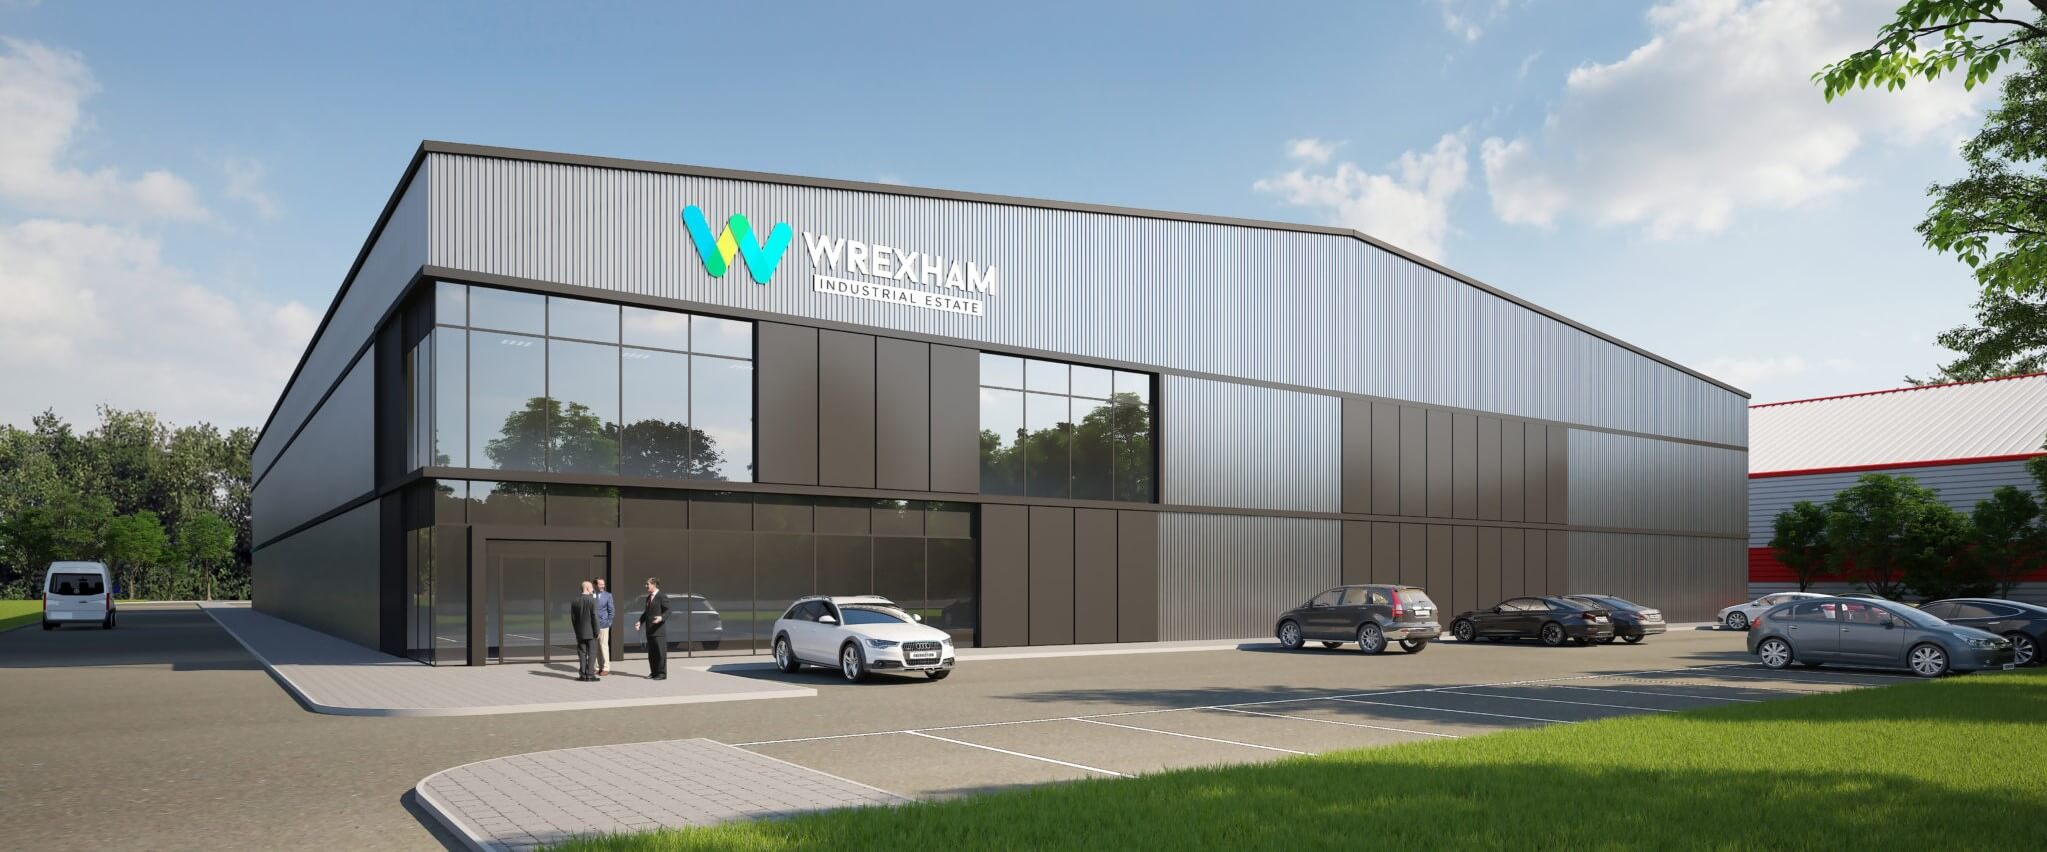 Wrexham Industrial Estate - new development May 2021